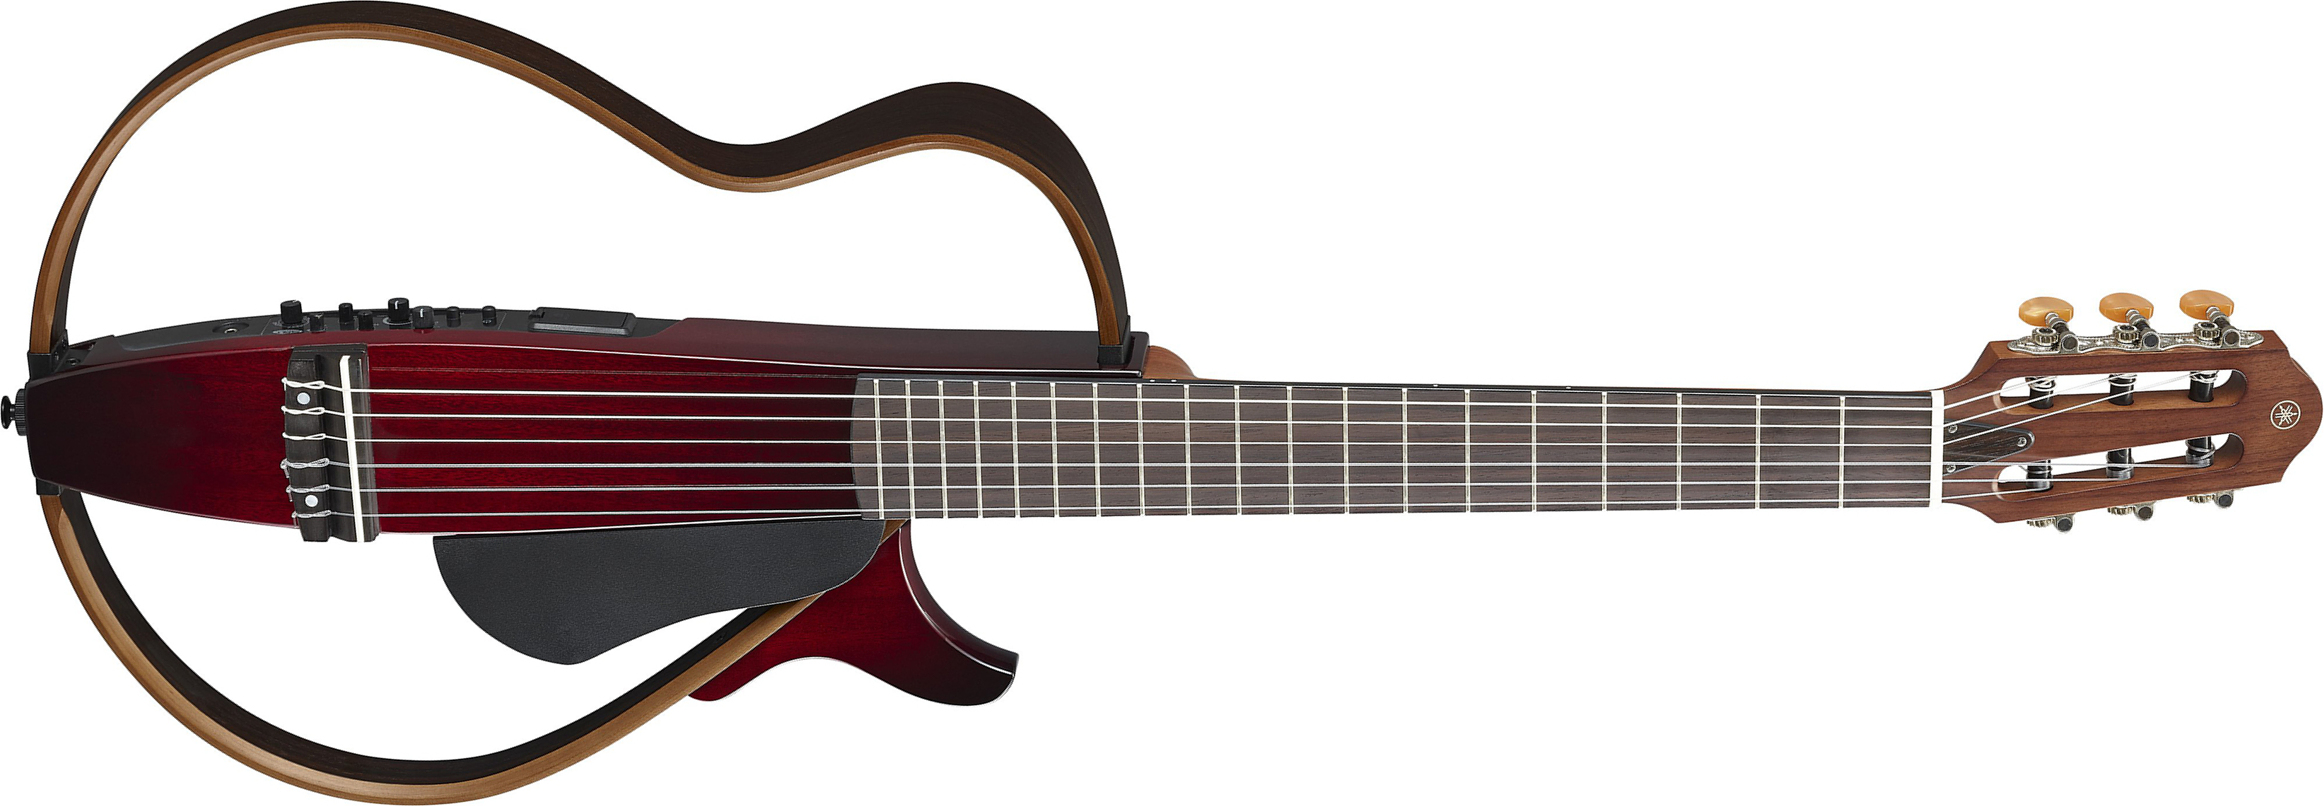 Yamaha Silent Guitar Slg200n Nylon String Cw Rw - Crimson Red Burst - Classical guitar 4/4 size - Main picture